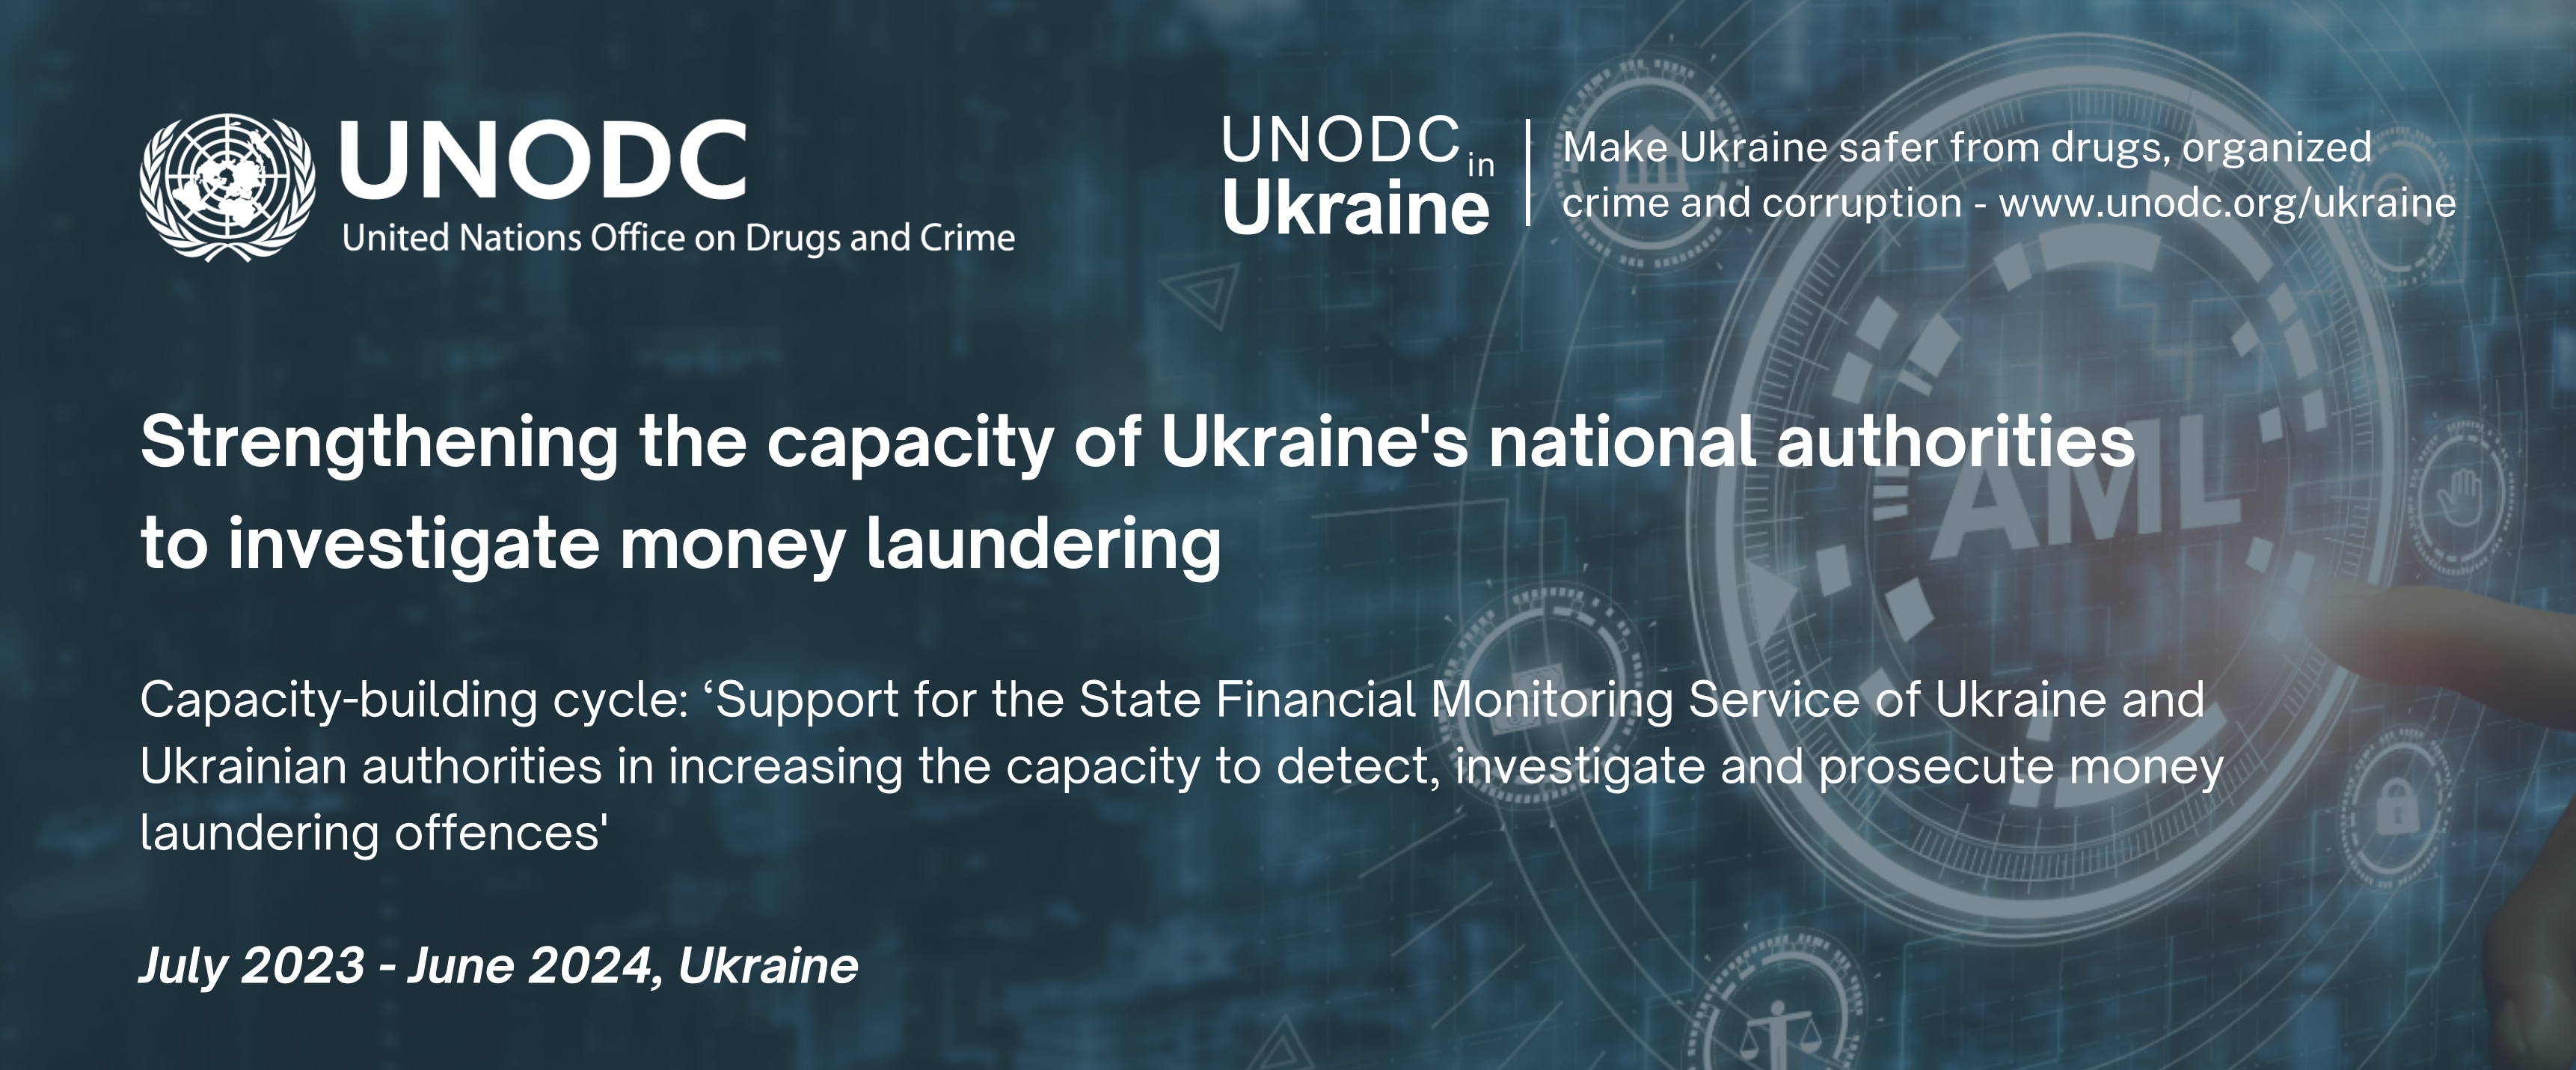 Strengthening the capacity of Ukraine's national authorities to investigate money laundering